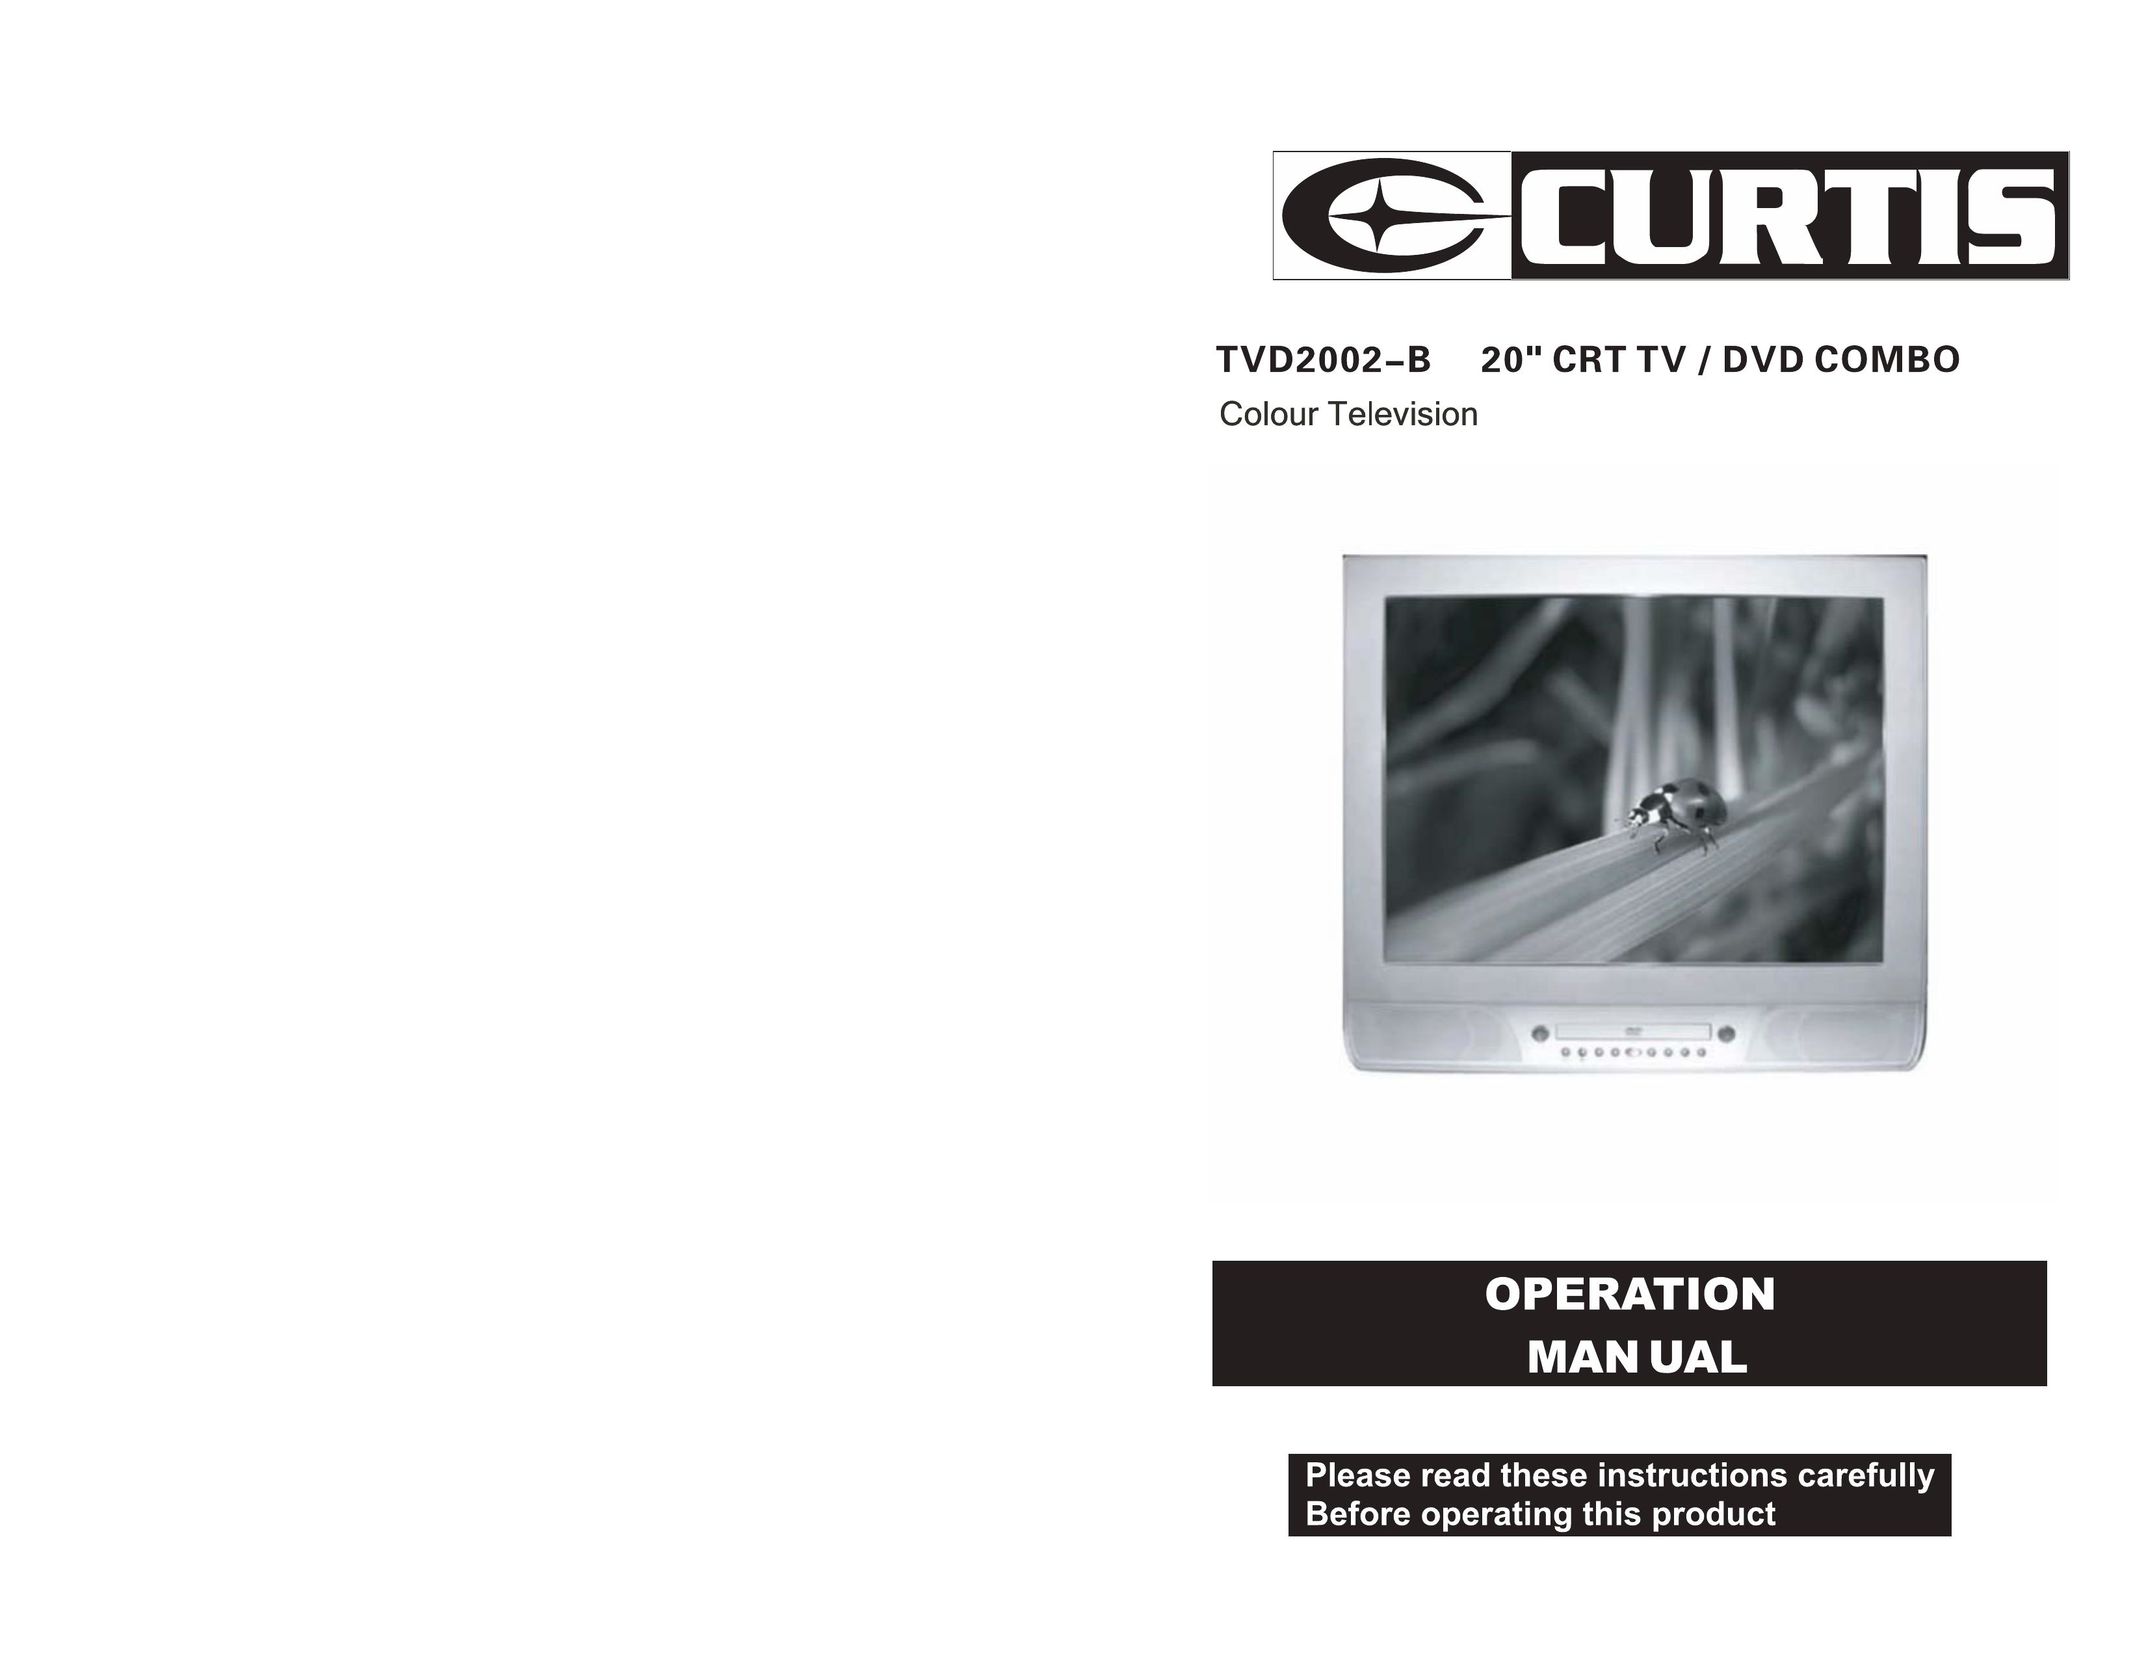 Curtis TVD2002-B CRT Television User Manual